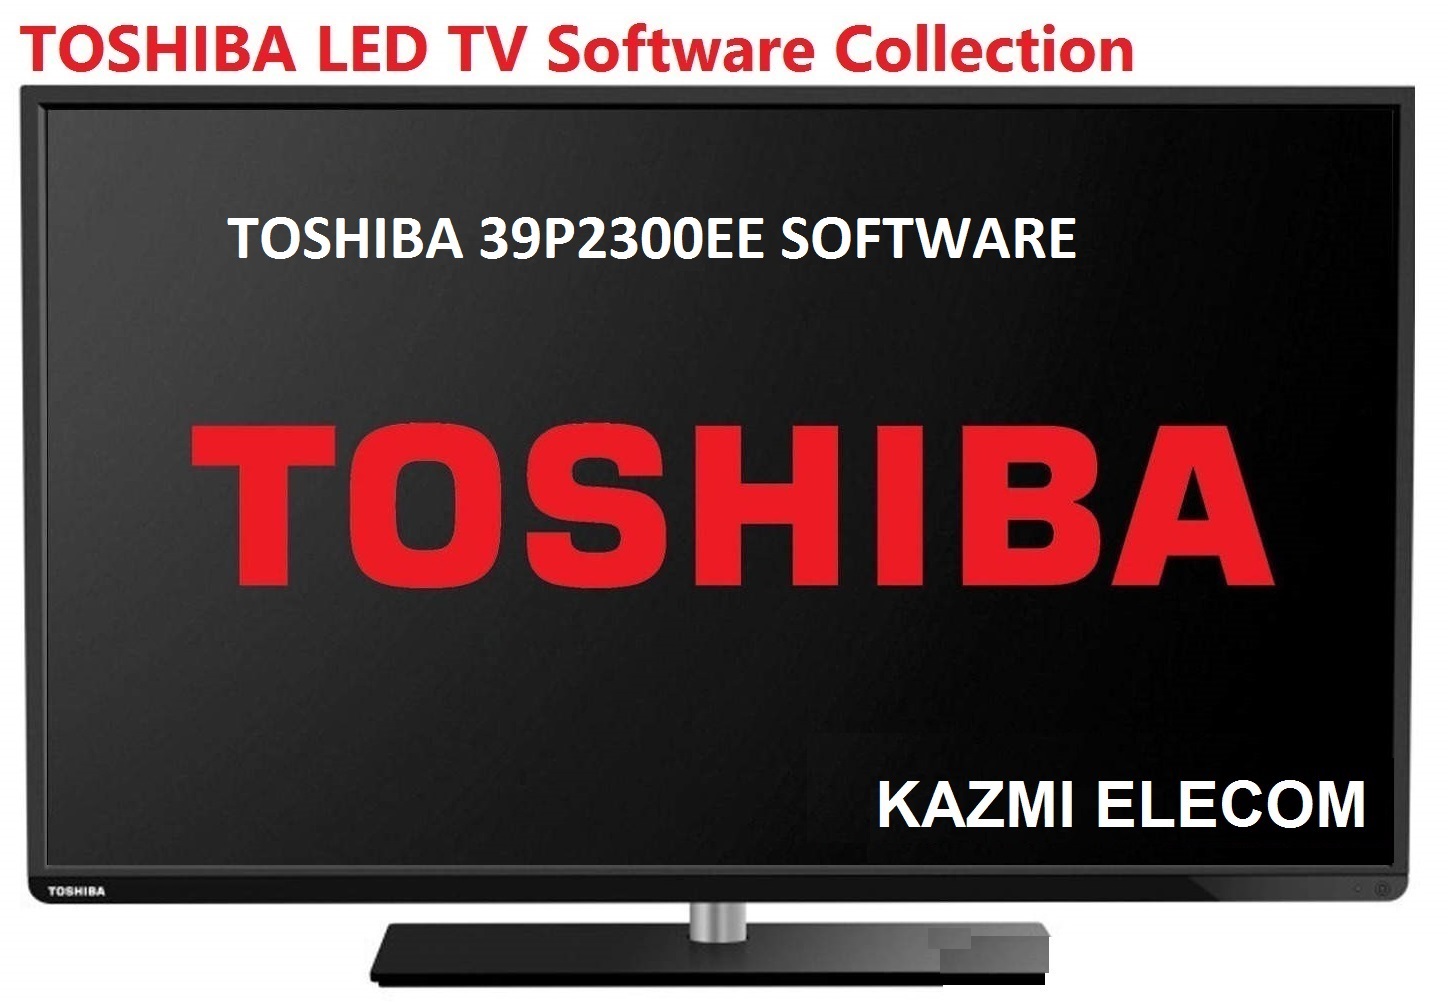 Toshiba 39P2300Ee